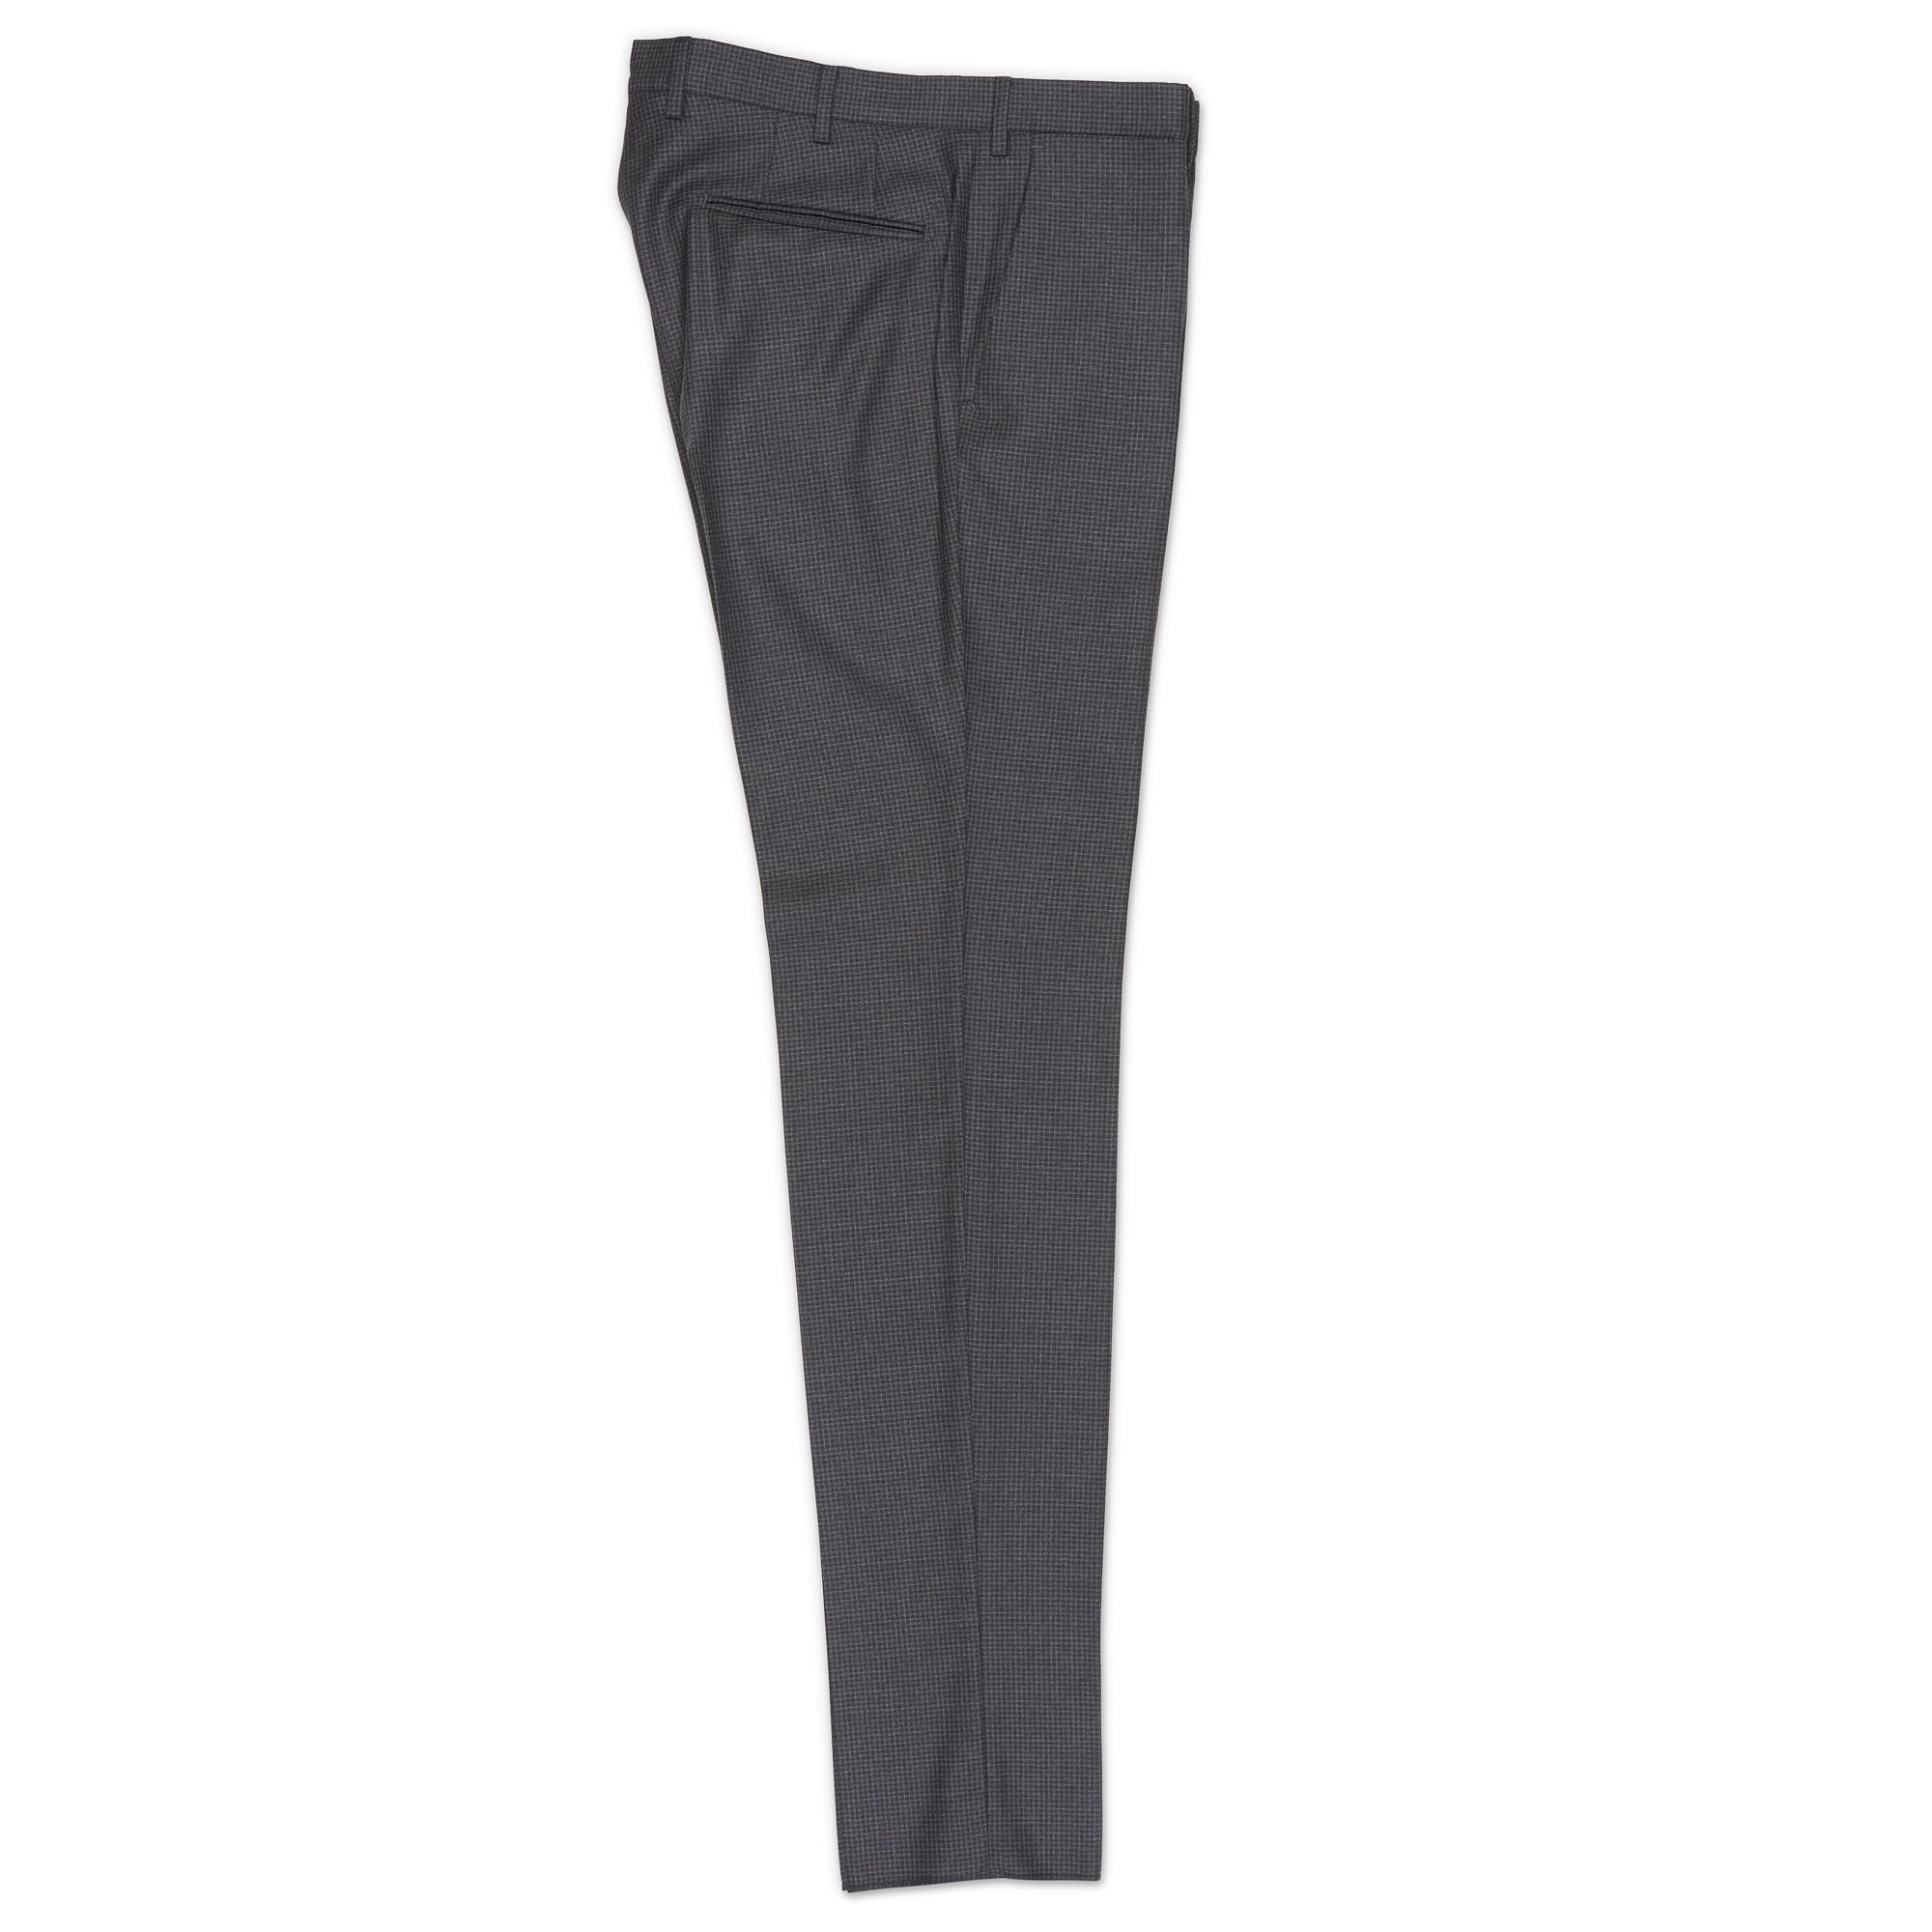 INCOTEX (Slowear) Dark Gray Patterned Virgin Wool Dress Pants NEW Slim Fit INCOTEX